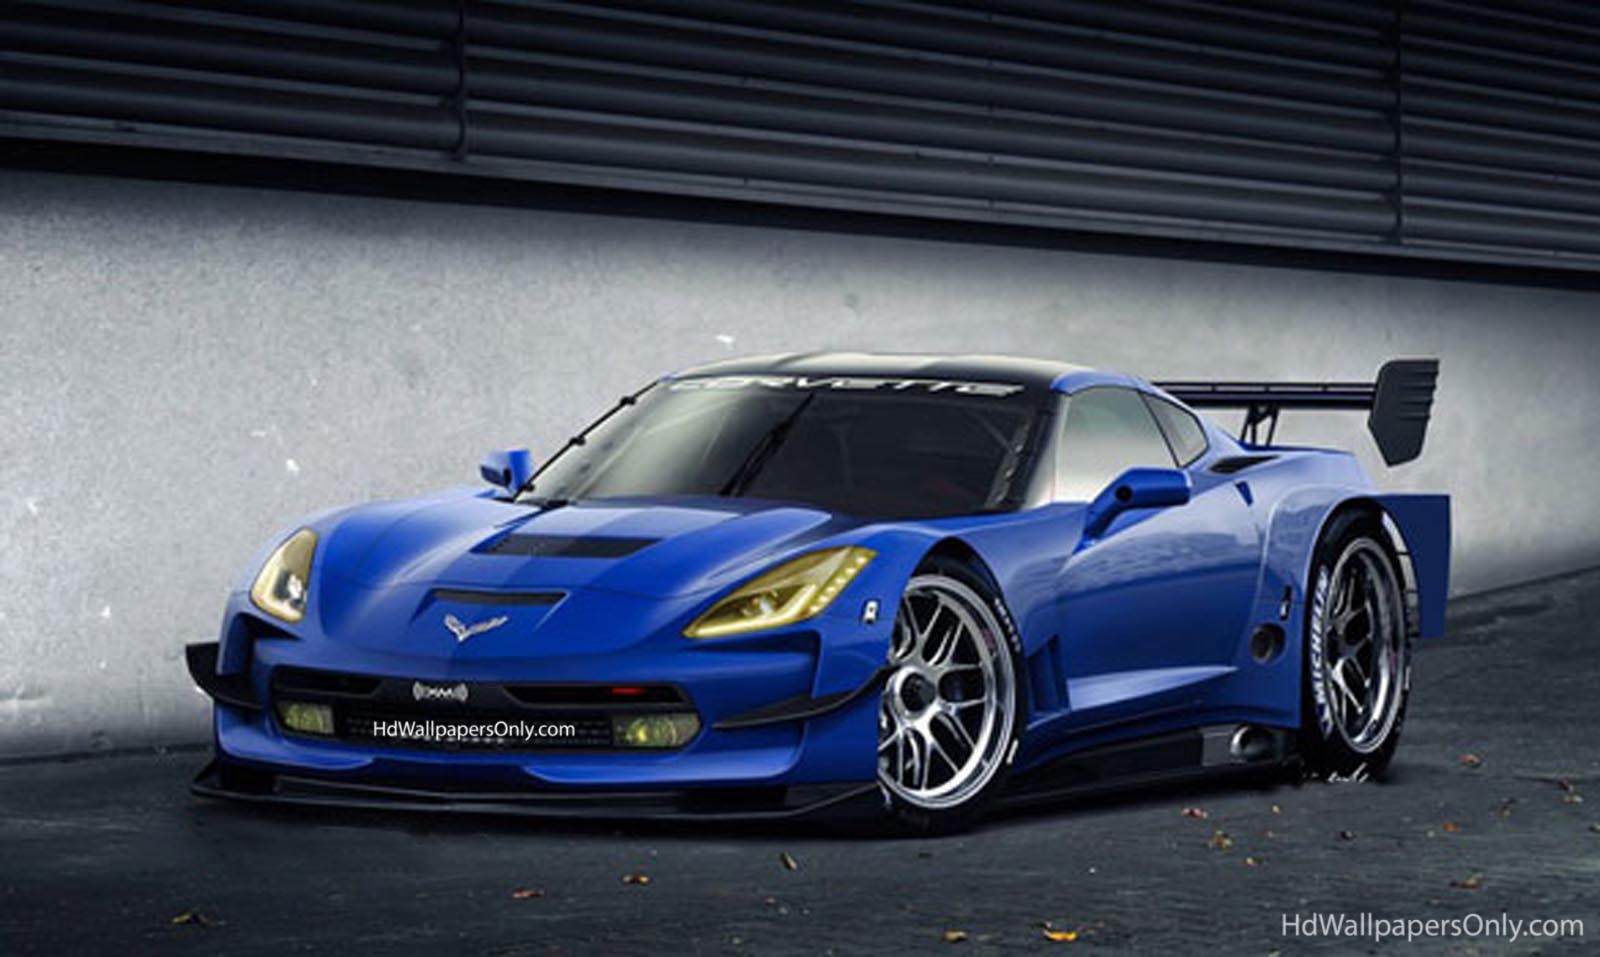 See the latest 2014 Corvette Vs 2015 Corvette Models and Reviews